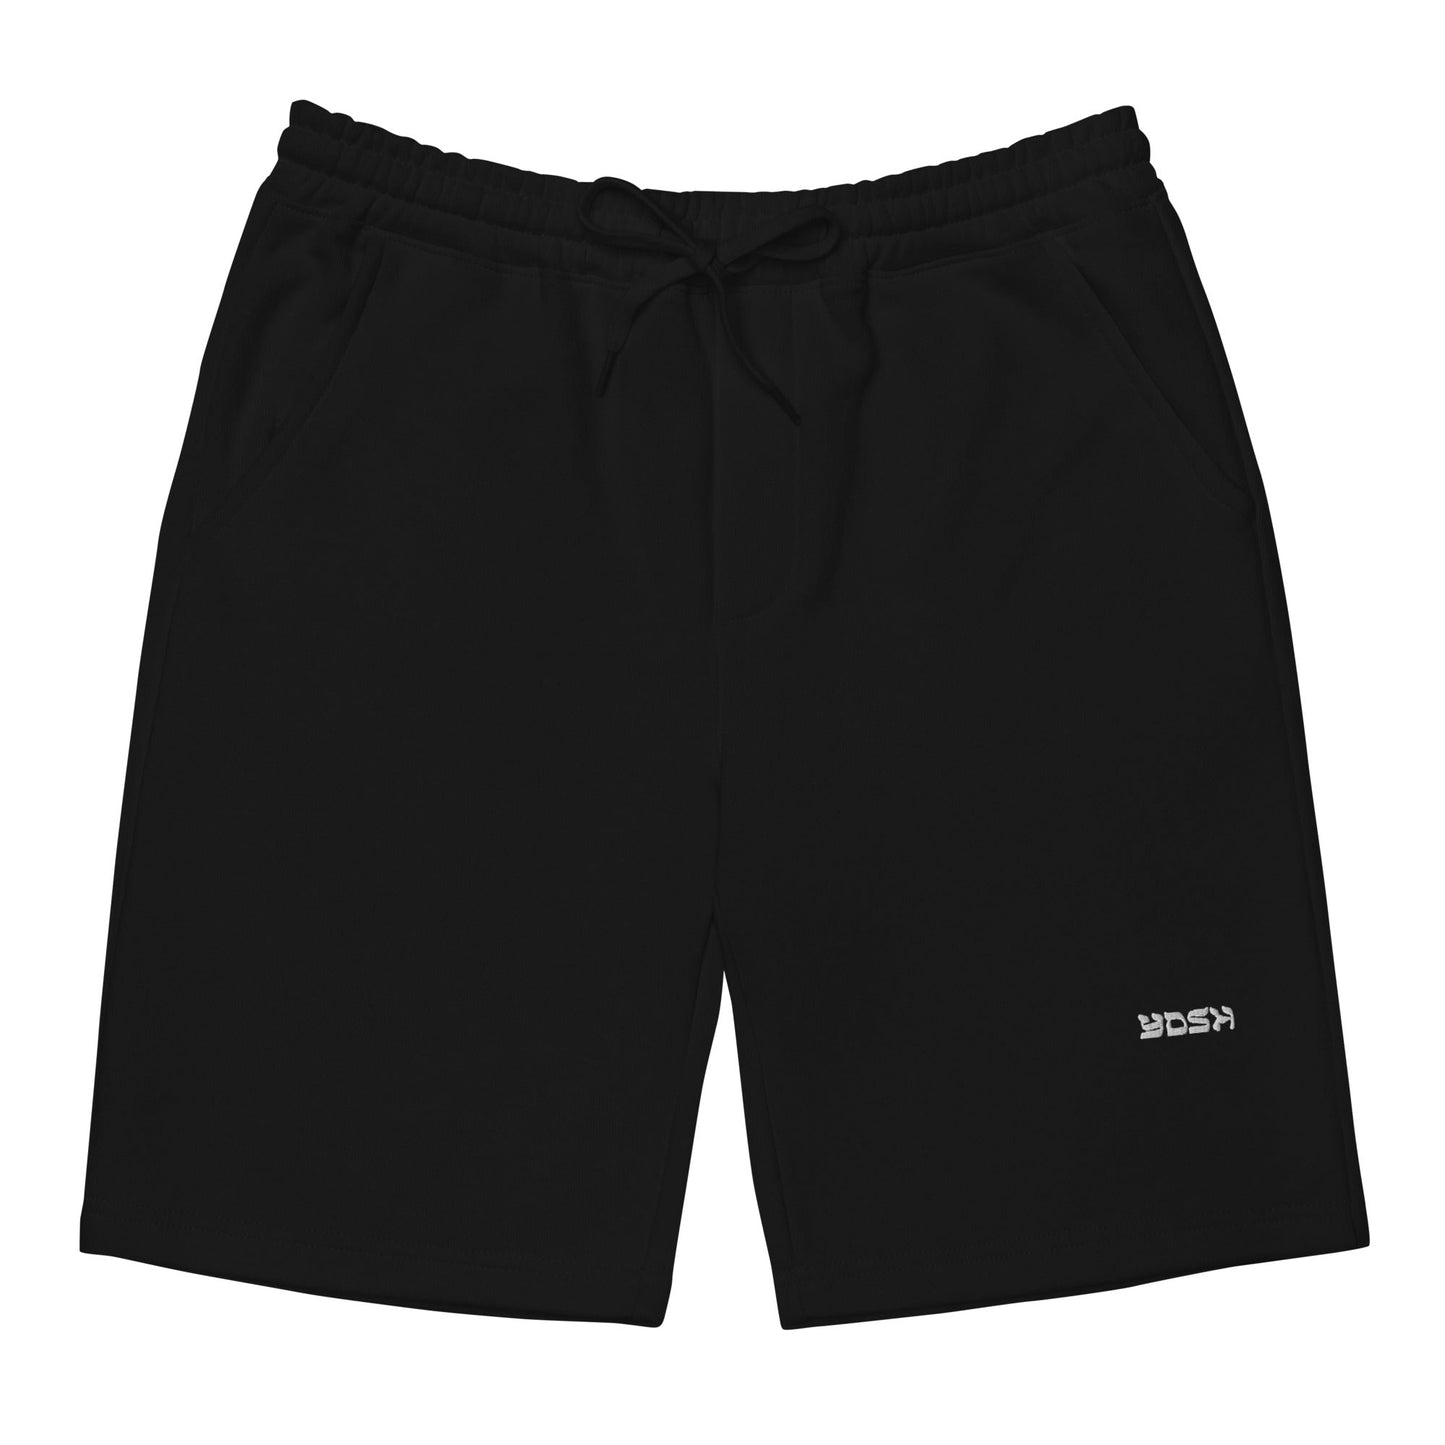 YDSH Shorts - Shorts - Meshugge